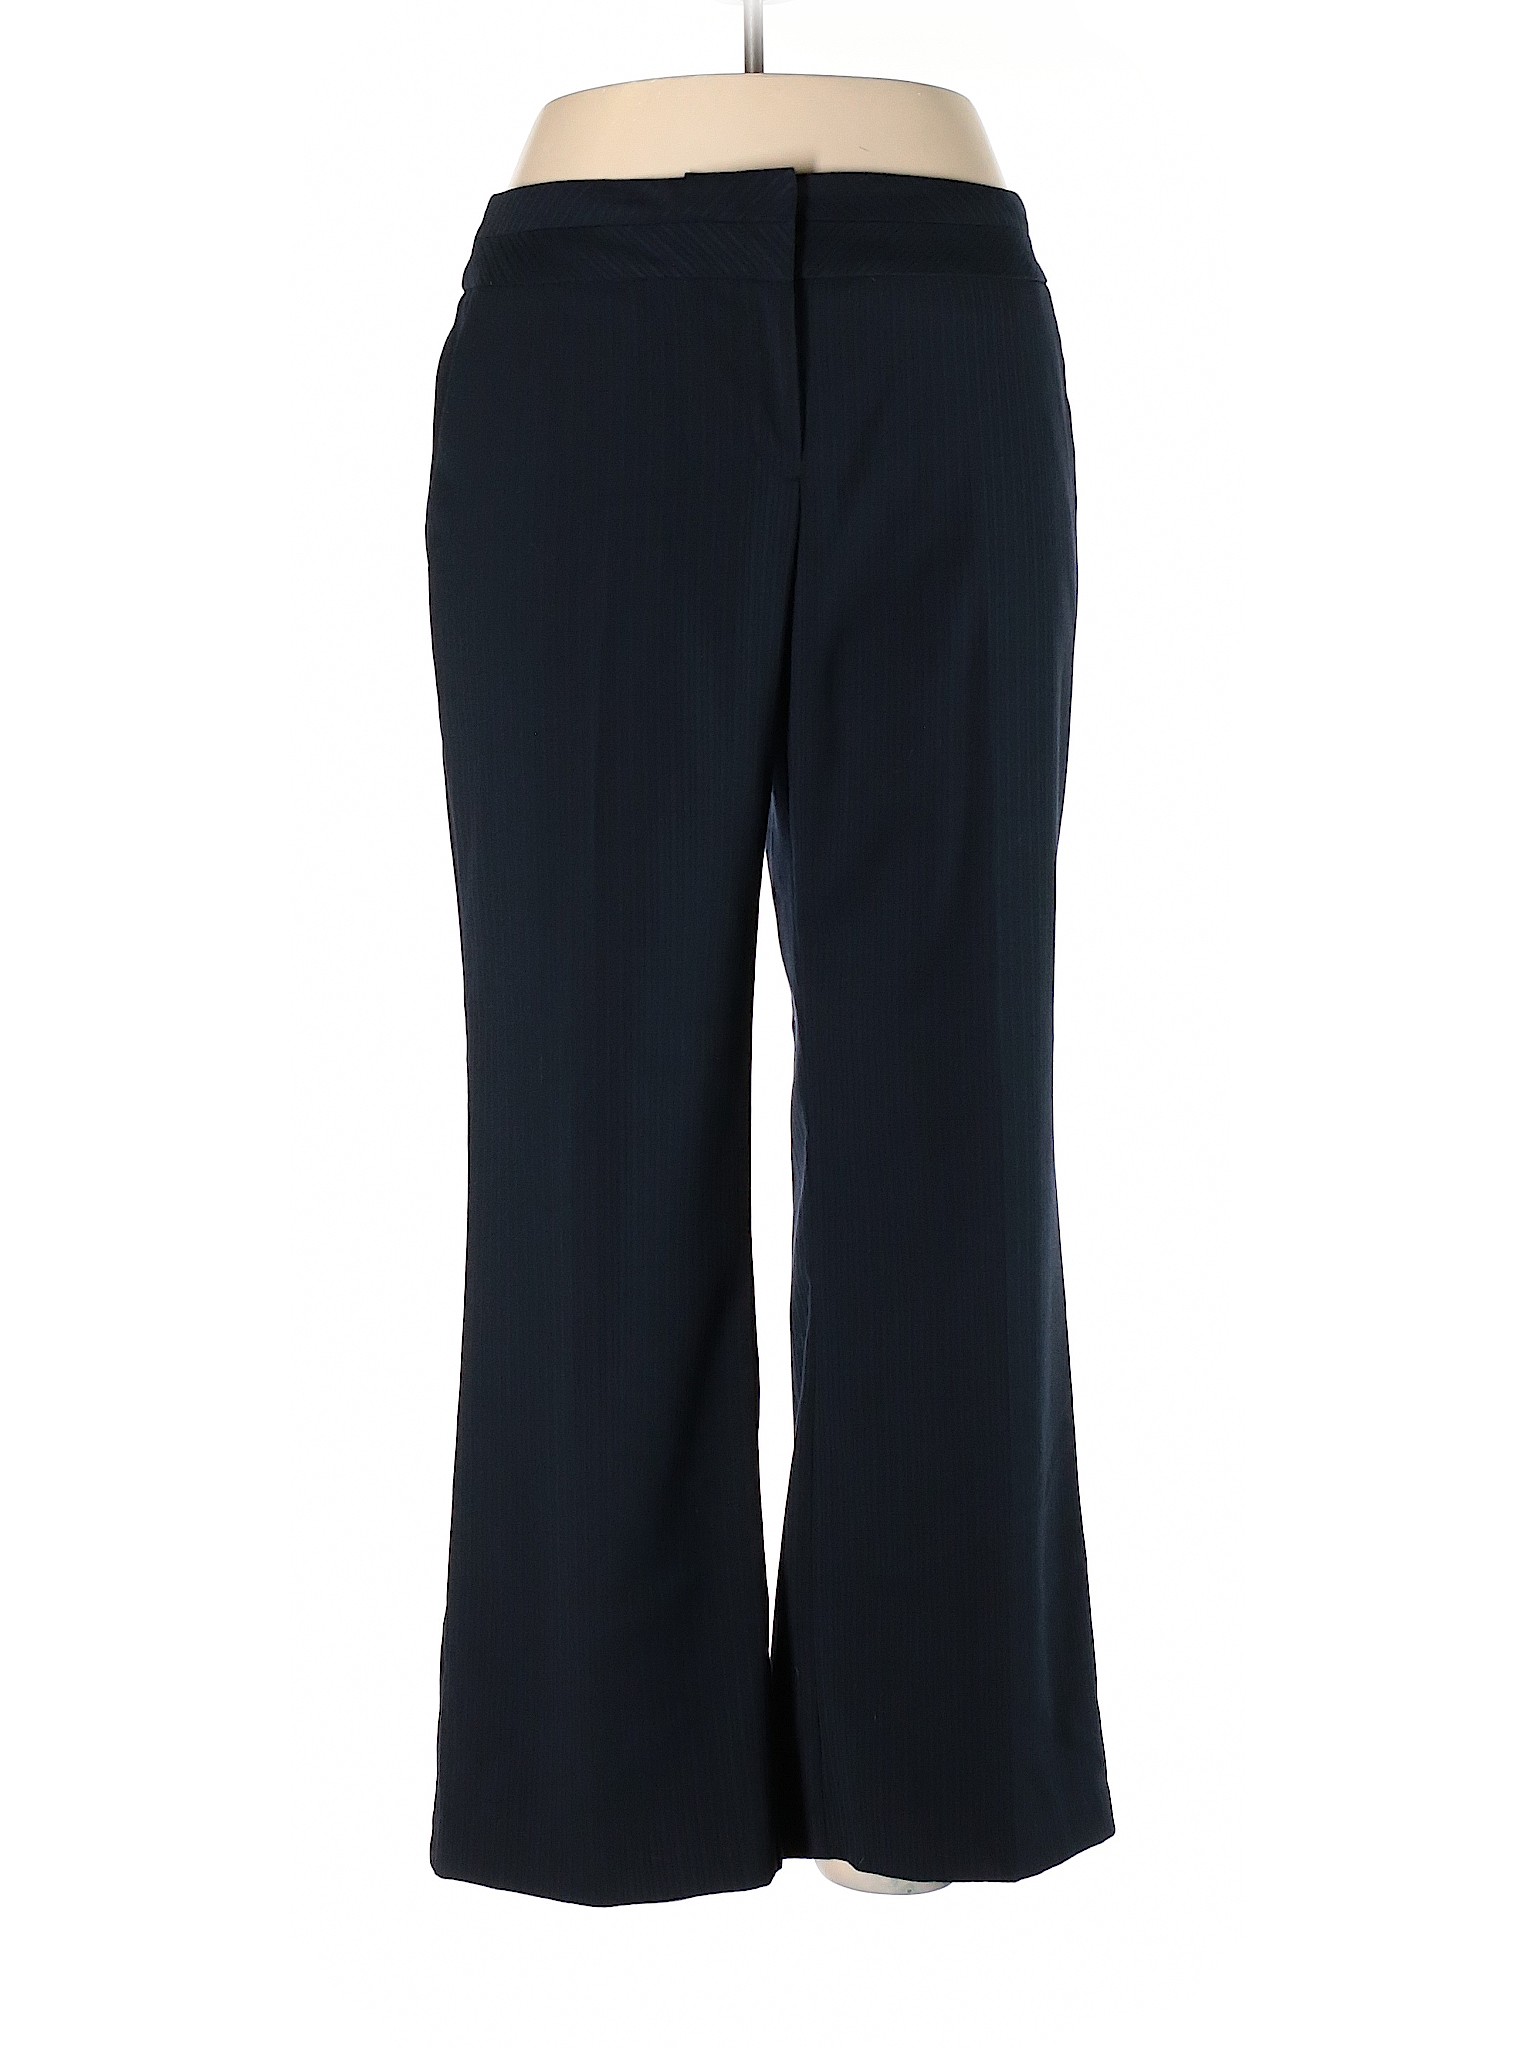 Briggs New York Women Black Dress Pants 14 Petites | eBay